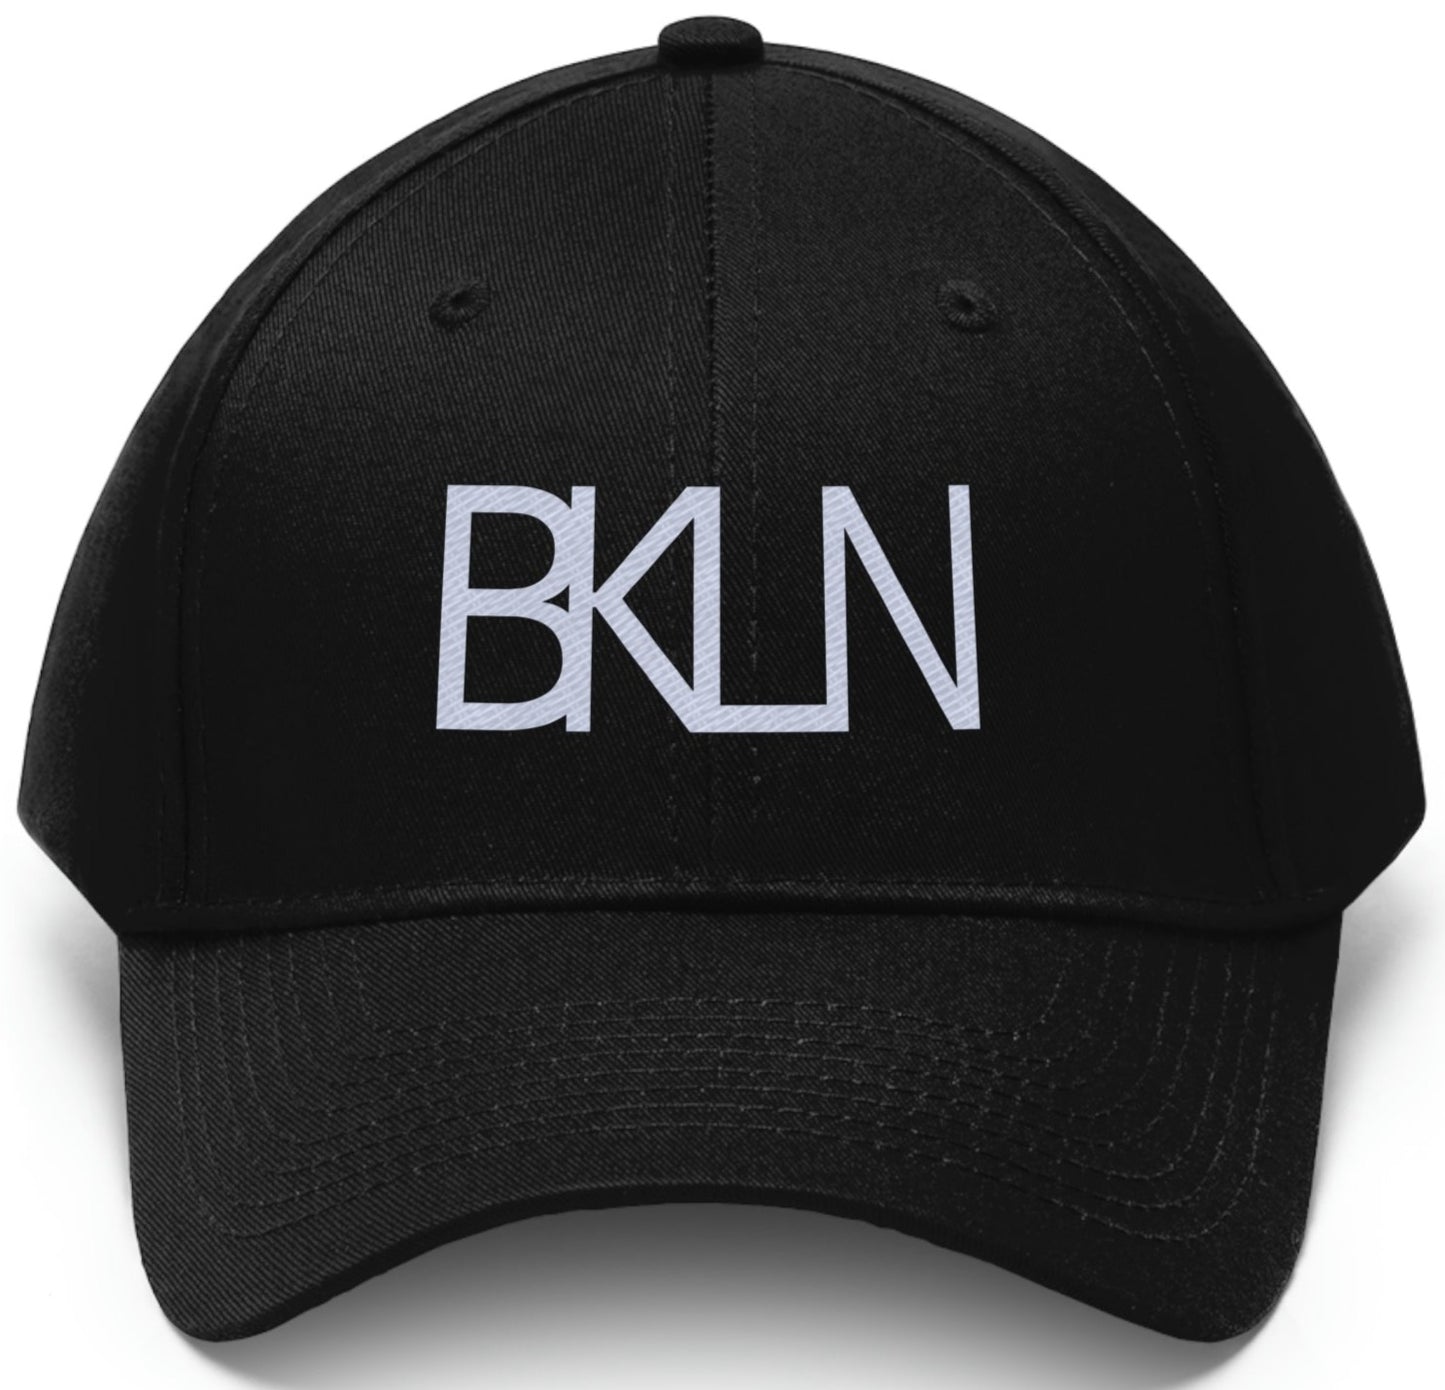 BKLN - Embroidered Hat